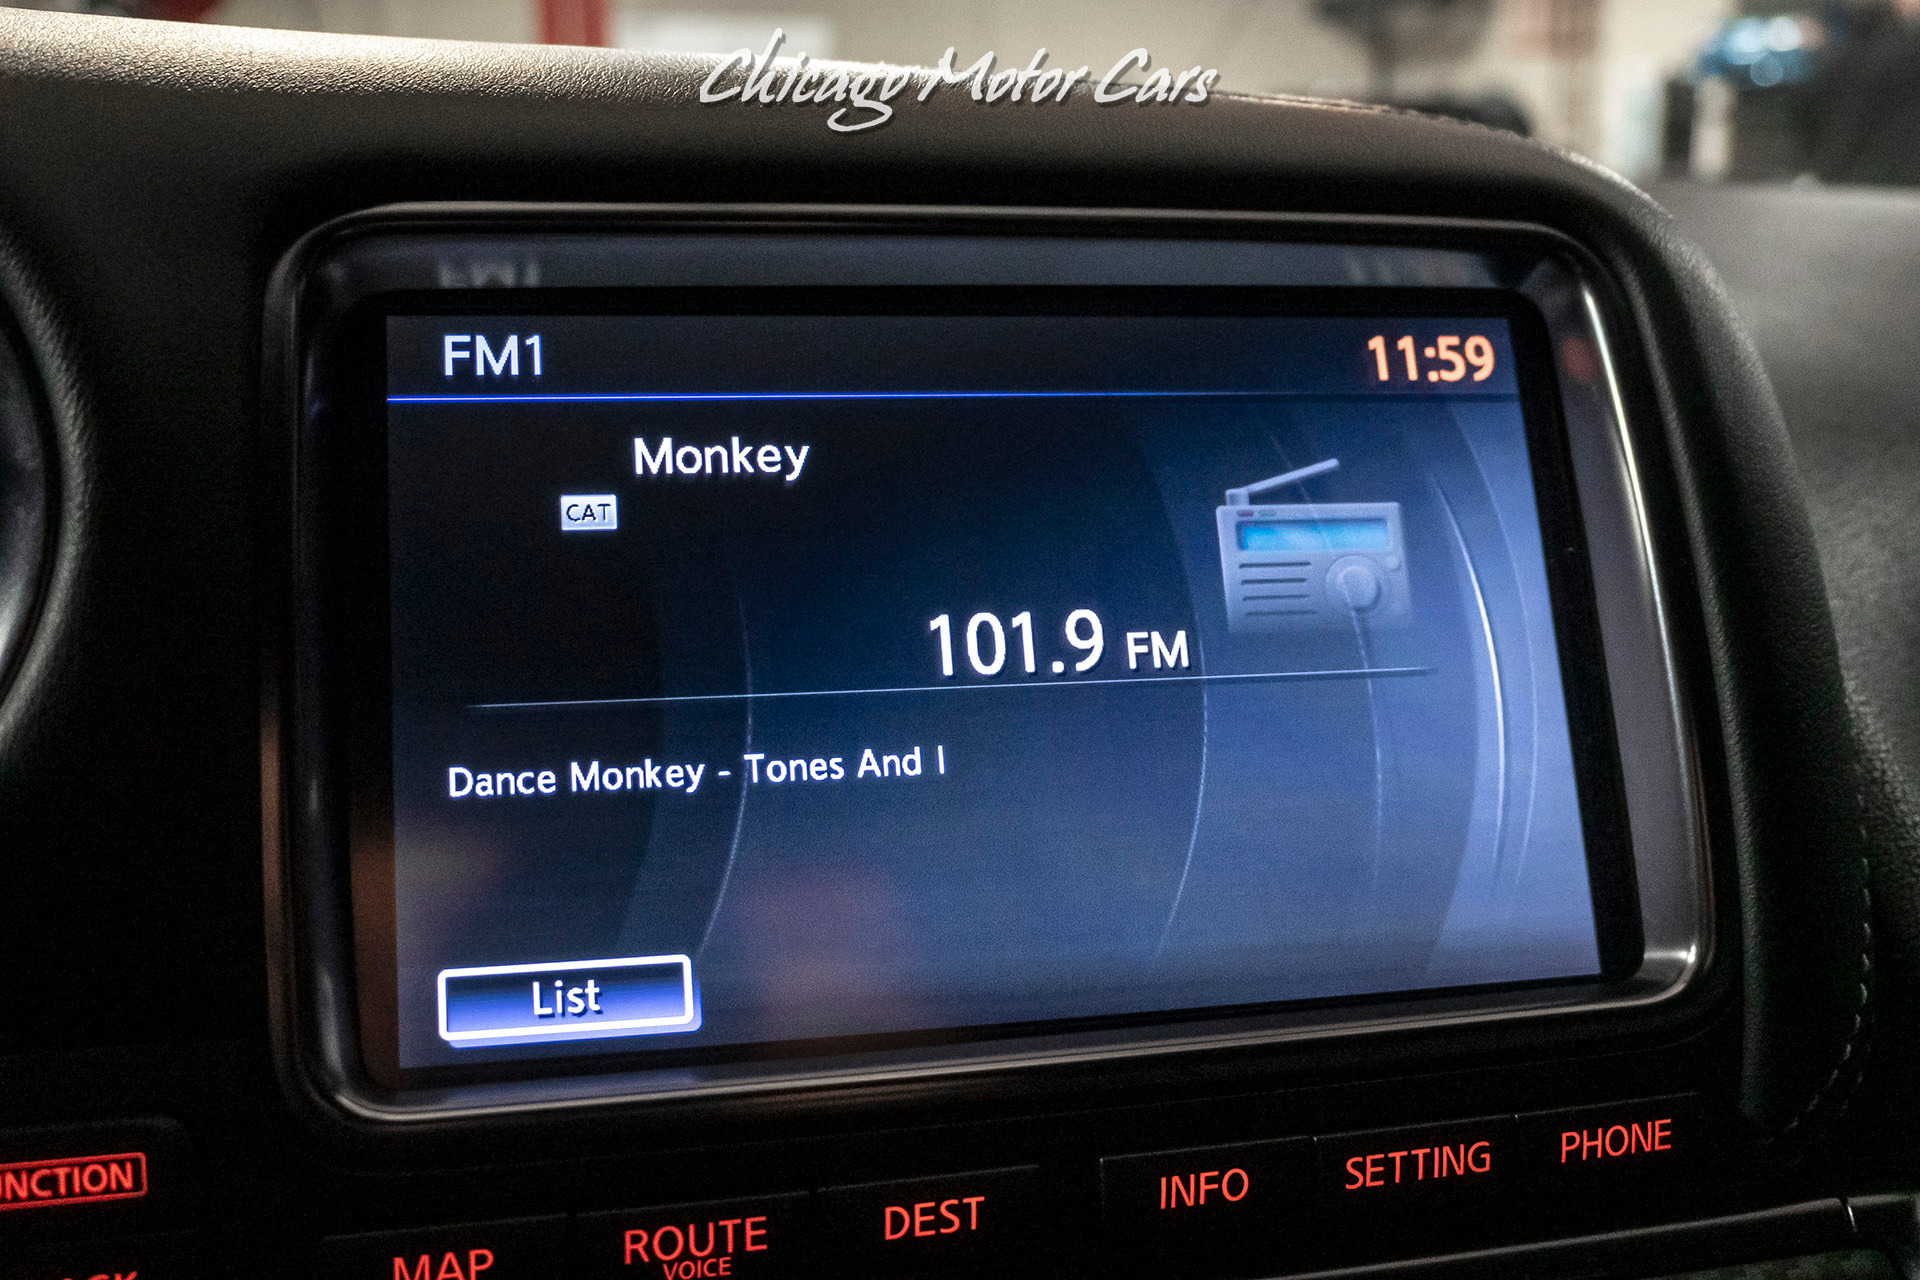 Tones and I 🚗 Dance Monkey